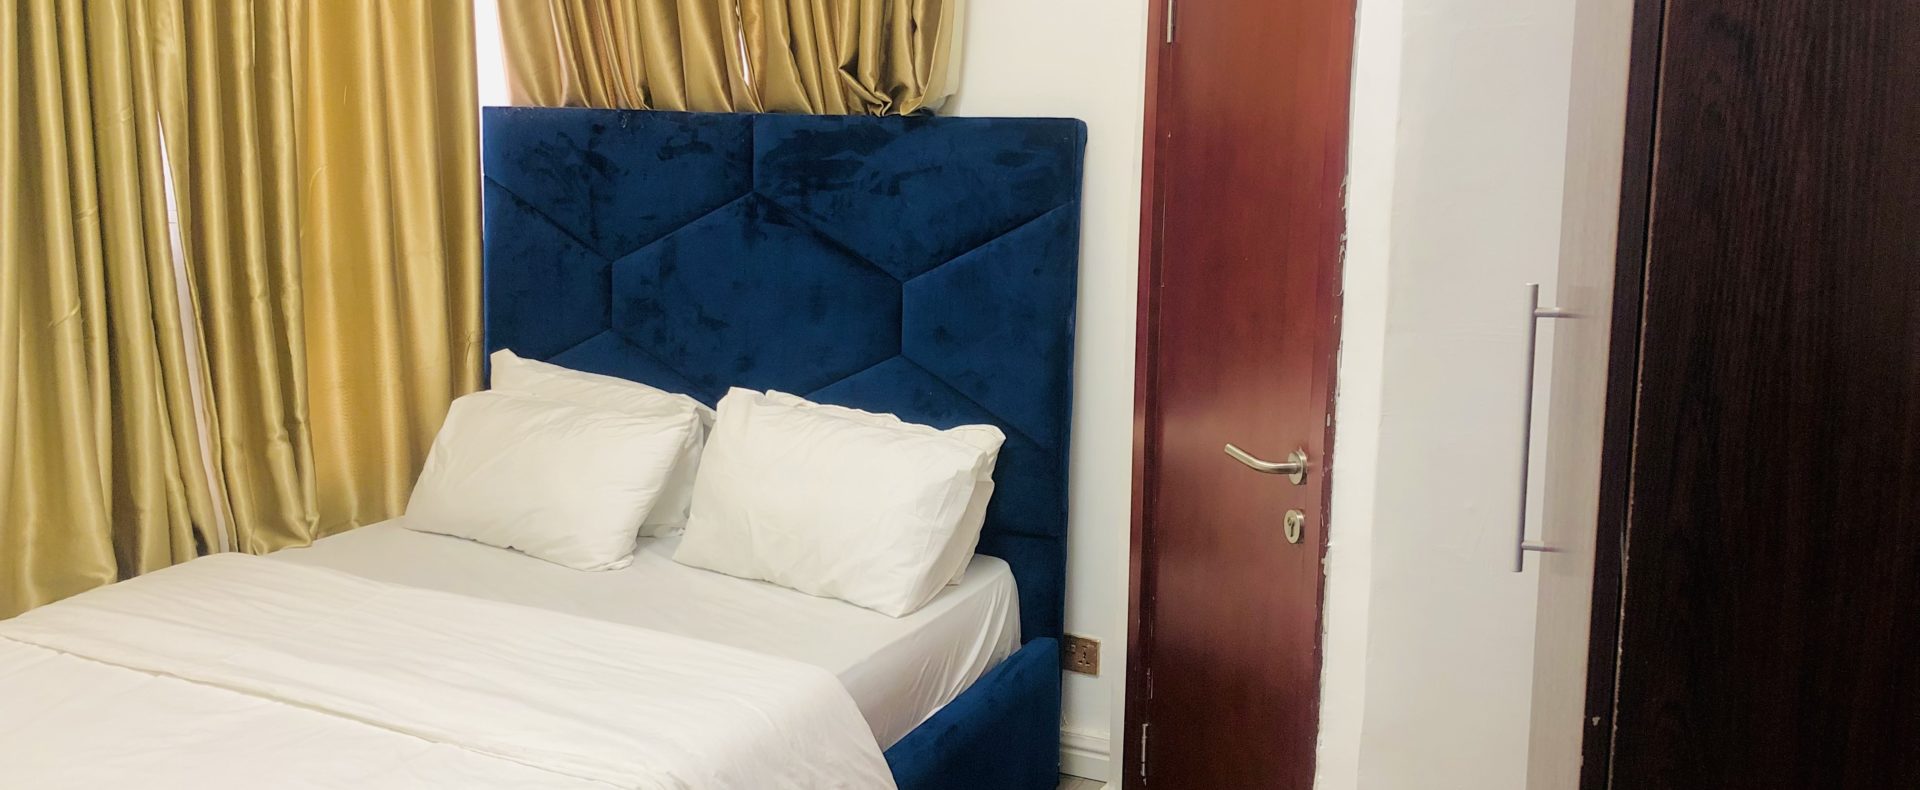 1 Bedroom Service Apartment Short Let In Lagos Nigeria